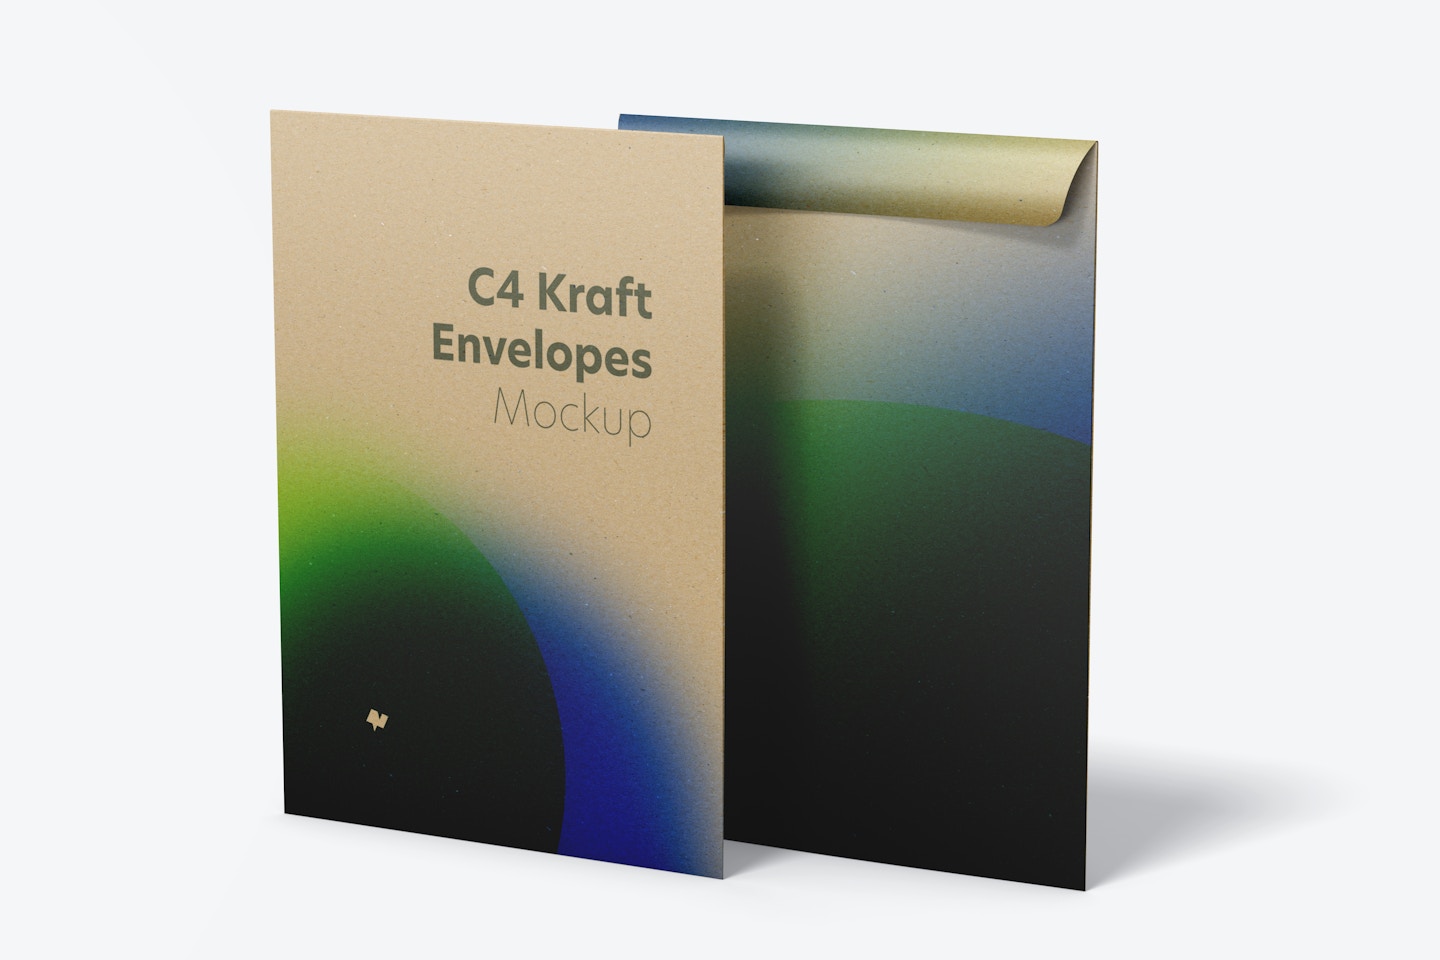 C4 Kraft Envelopes Mockup, Front and Back View